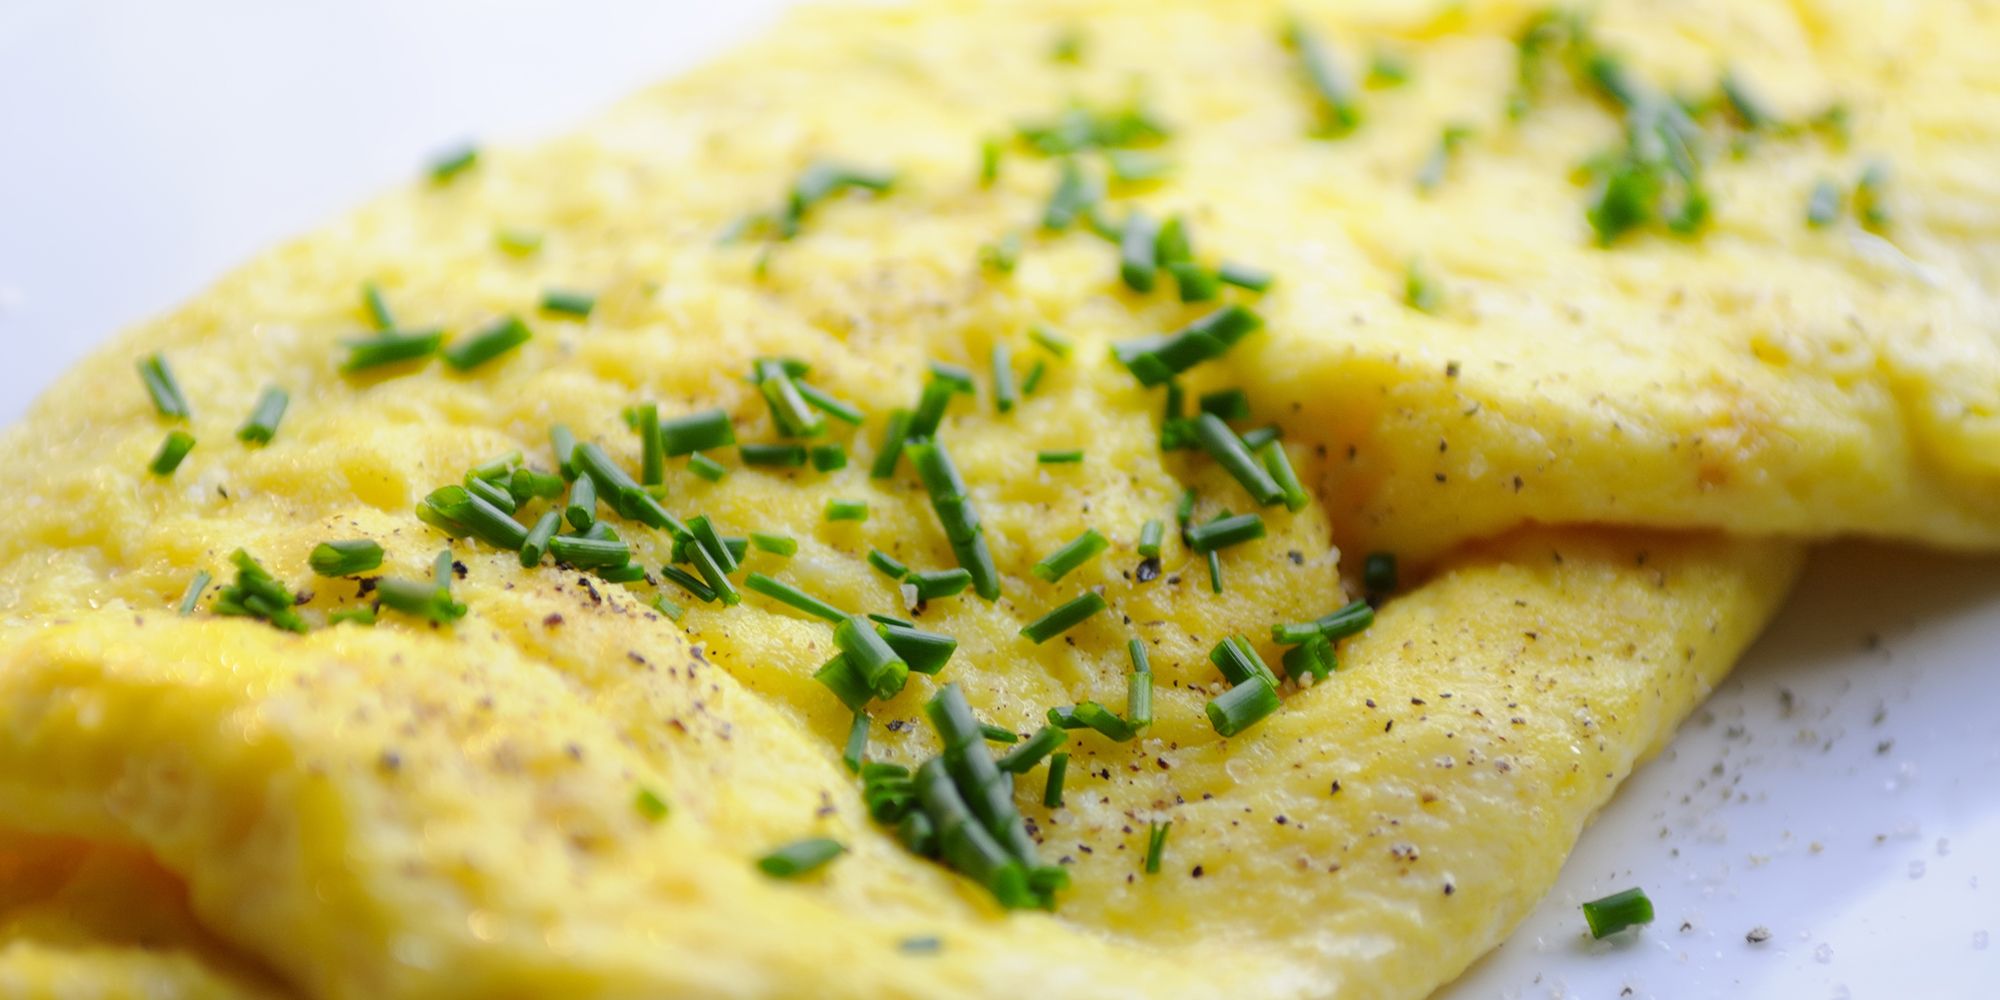 Best Omelette Recipe How To Make Omelettes,Streusel Topping